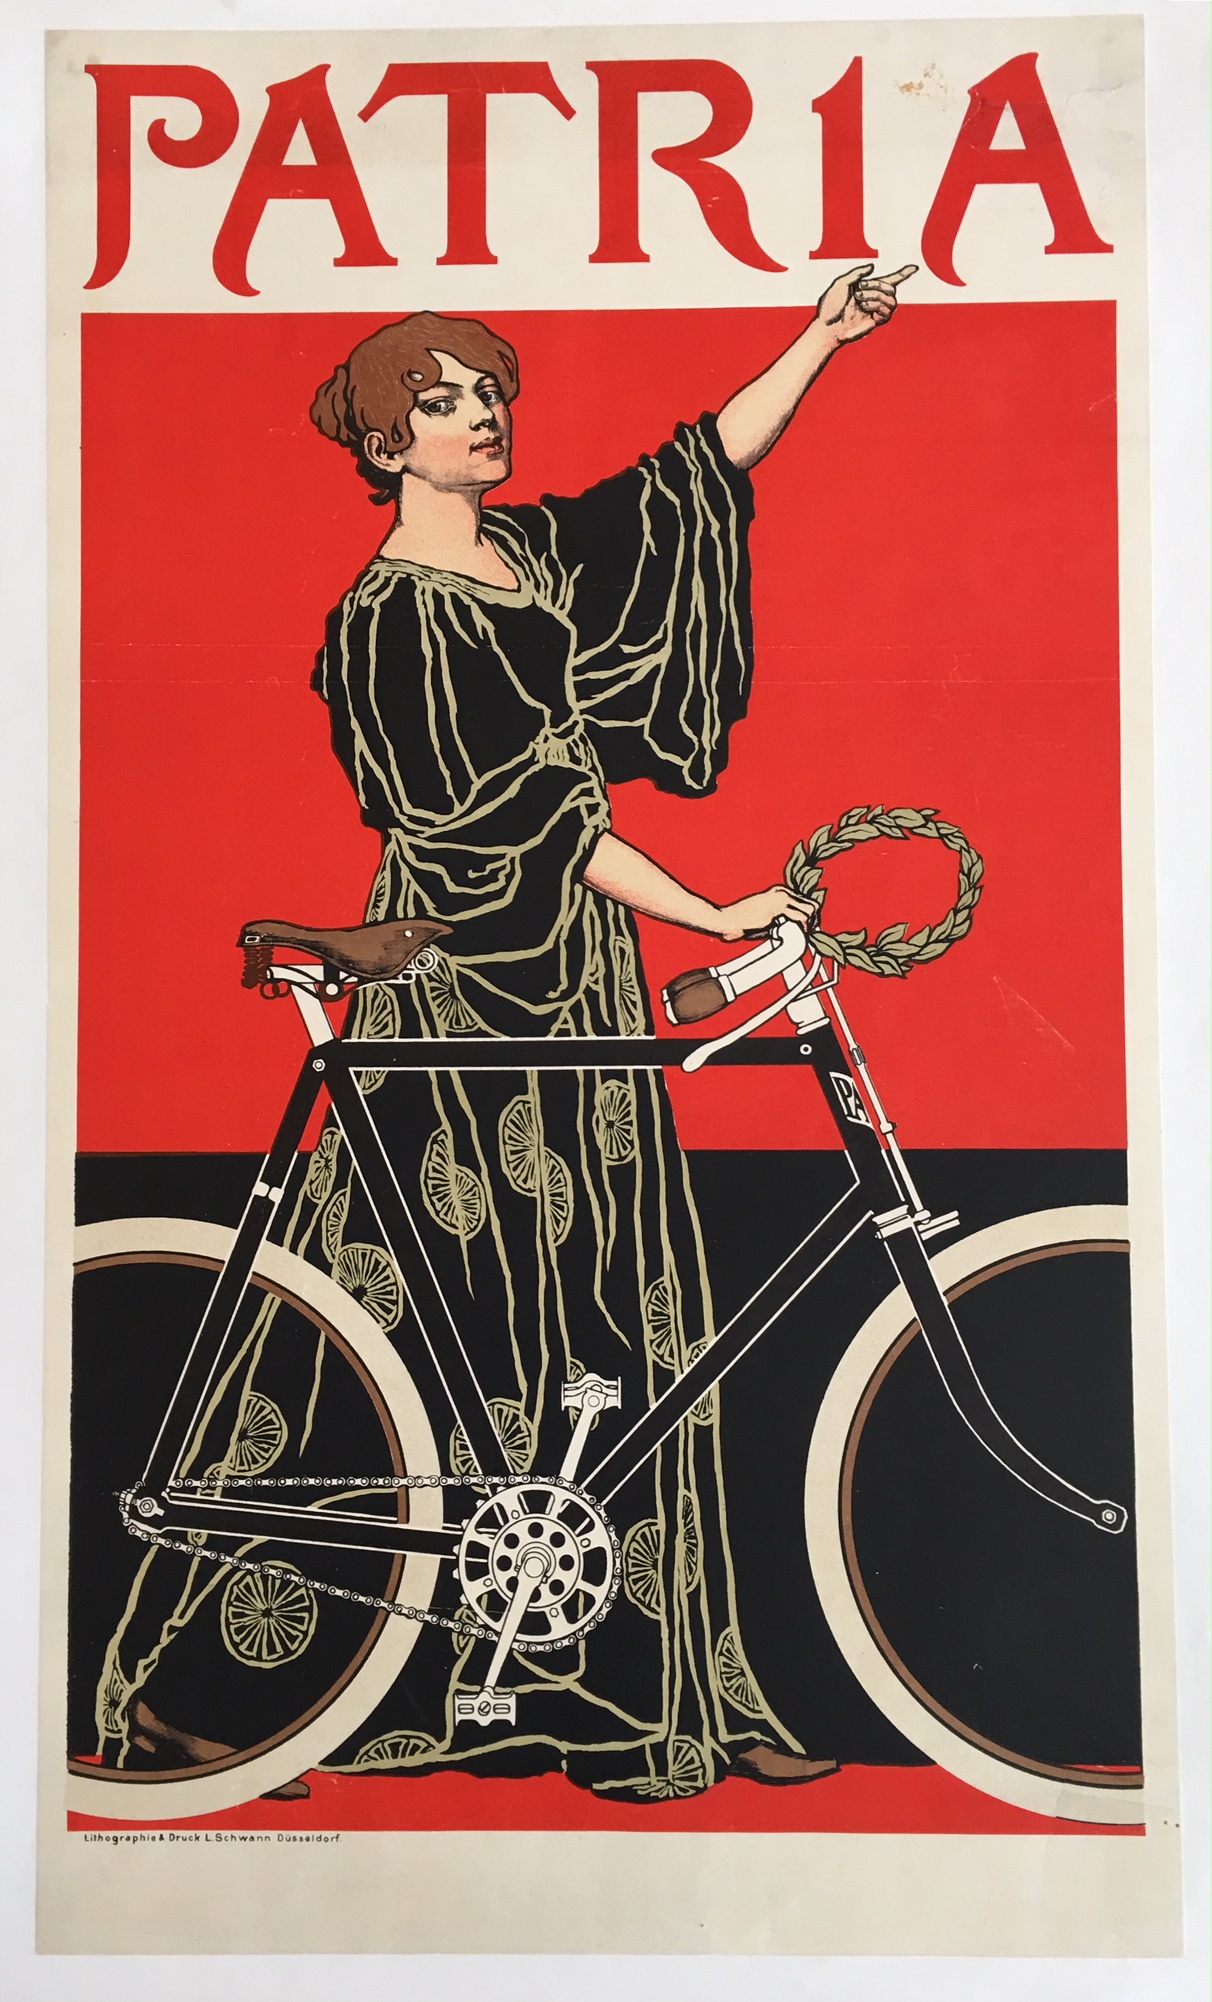 Patria Bicycle 1900's Original Vintage Poster Letitia Morris Gallery